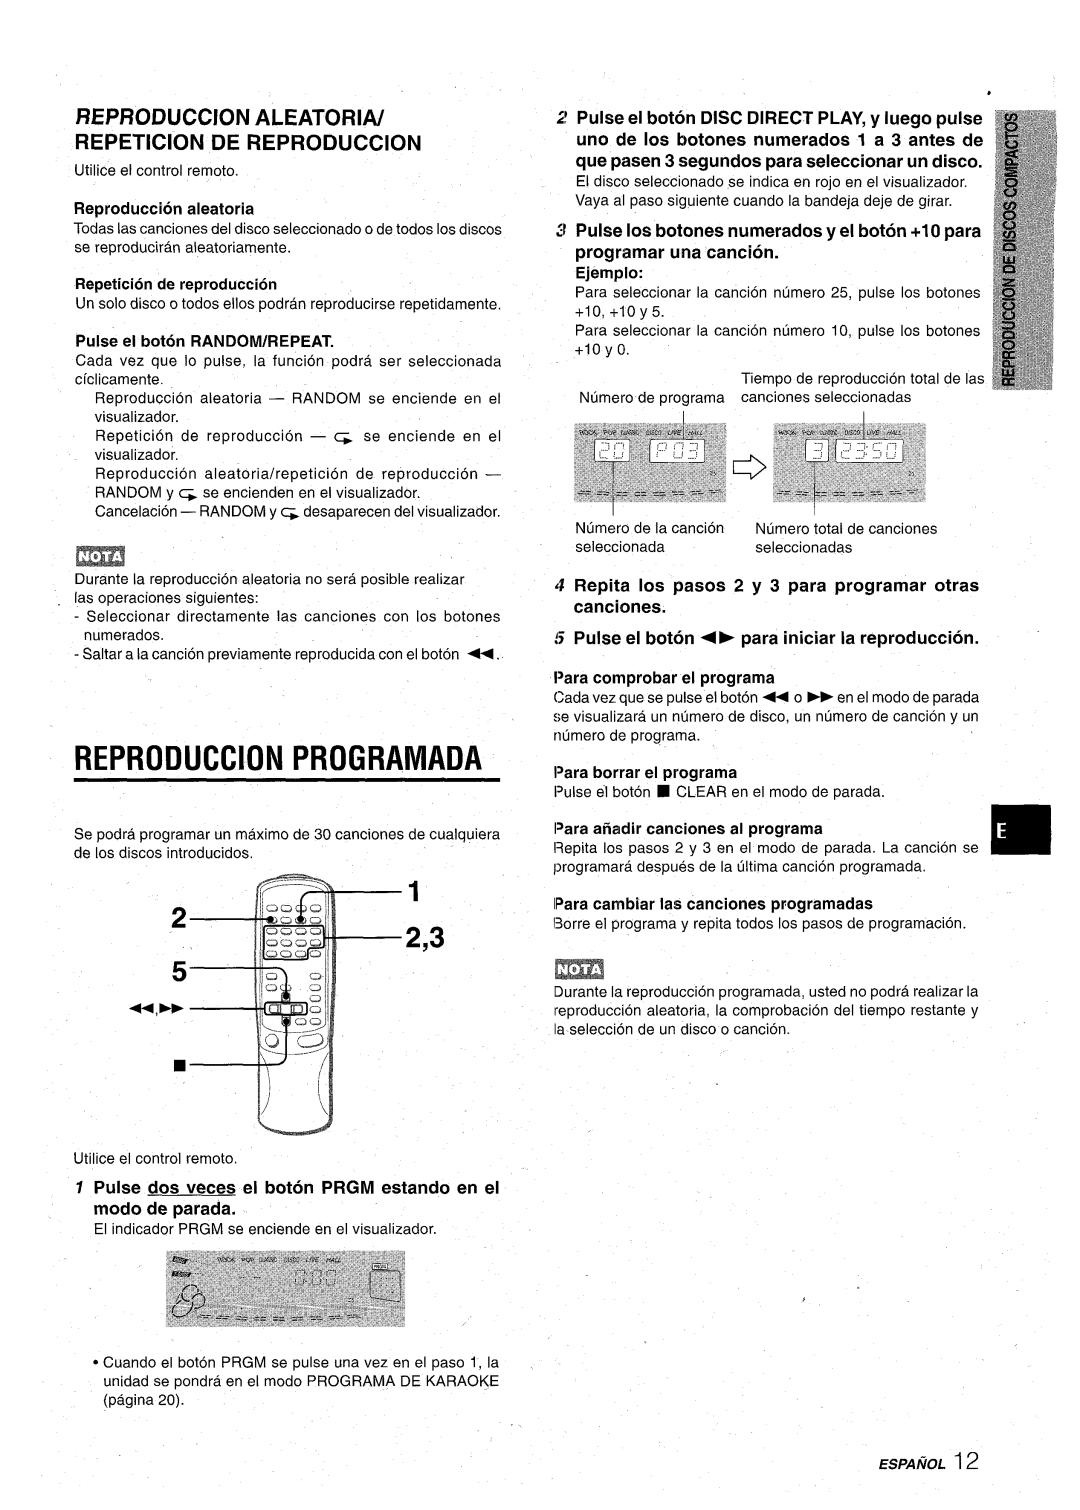 Aiwa CX-NA92 2*’54*2’3, Reproduction Programada, Reproduction Aleatoria/ Repetition De Reproduction, Ejempio, Espanol 